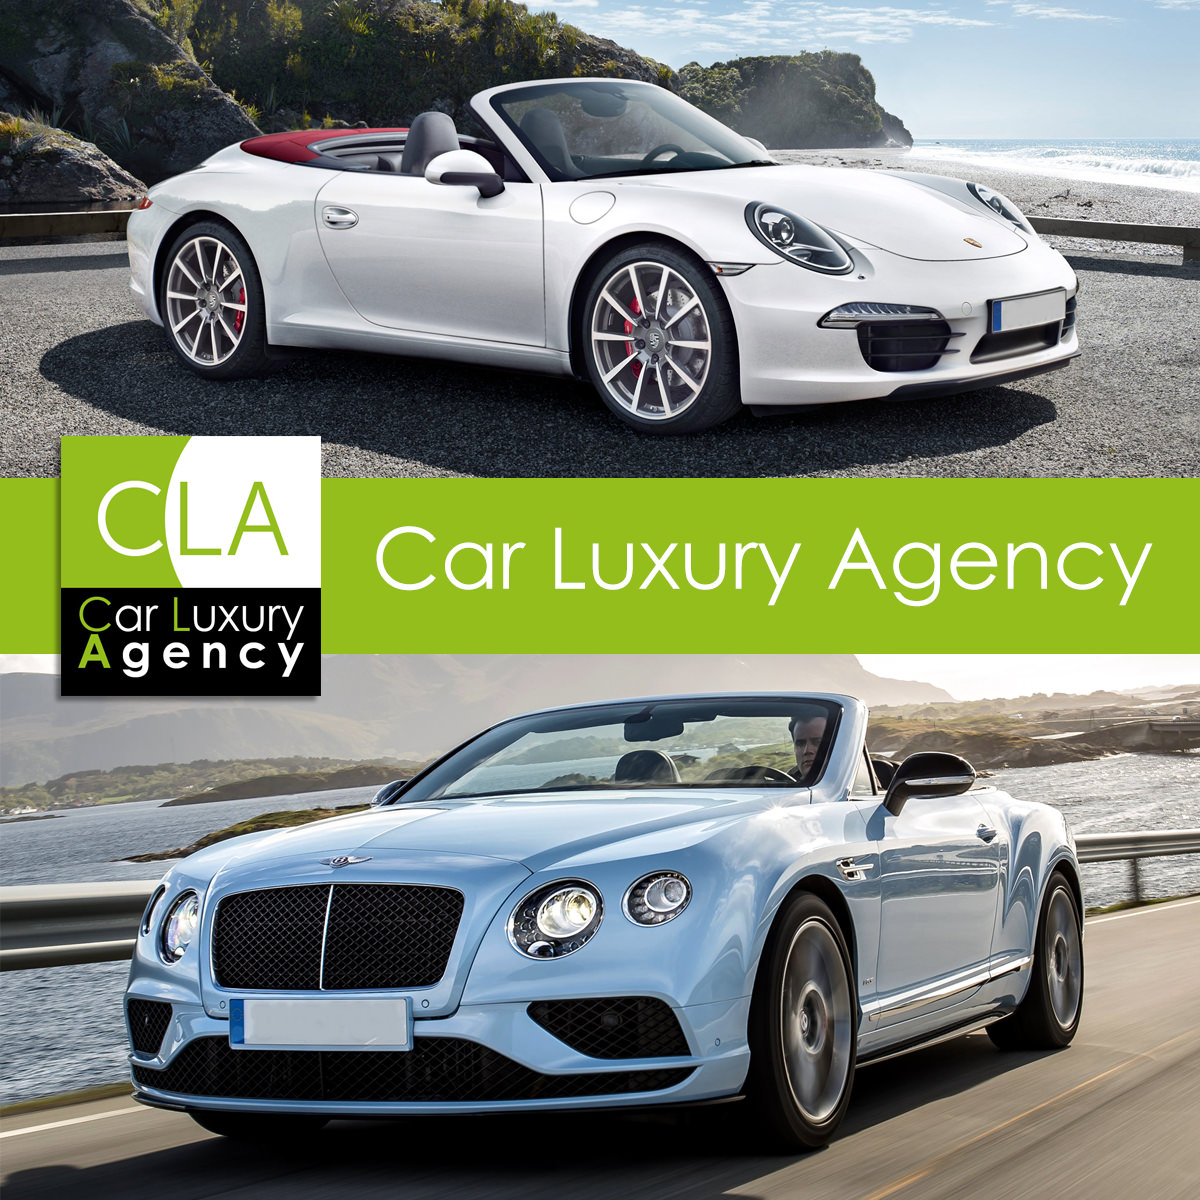 Car Luxury Agency Feedbacks Reviews